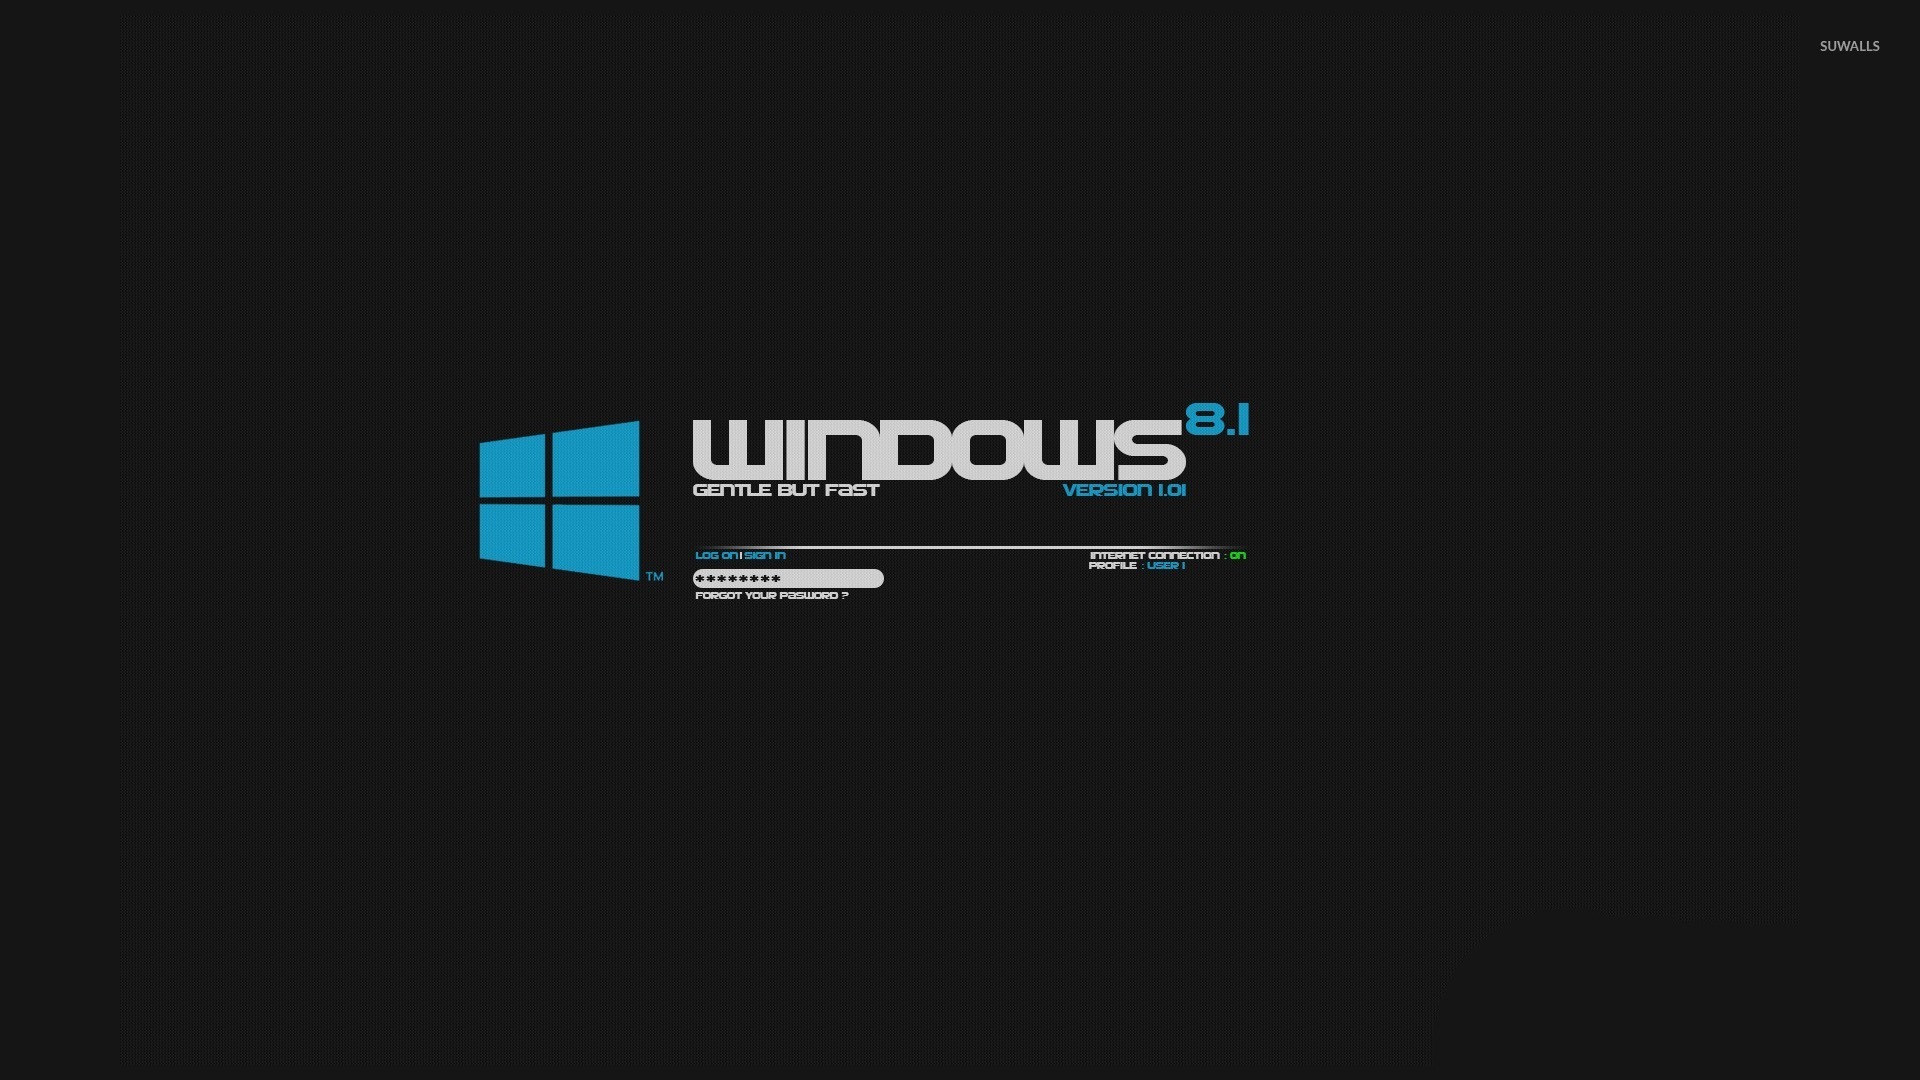 Windows 81 wallpaper 1920x1080